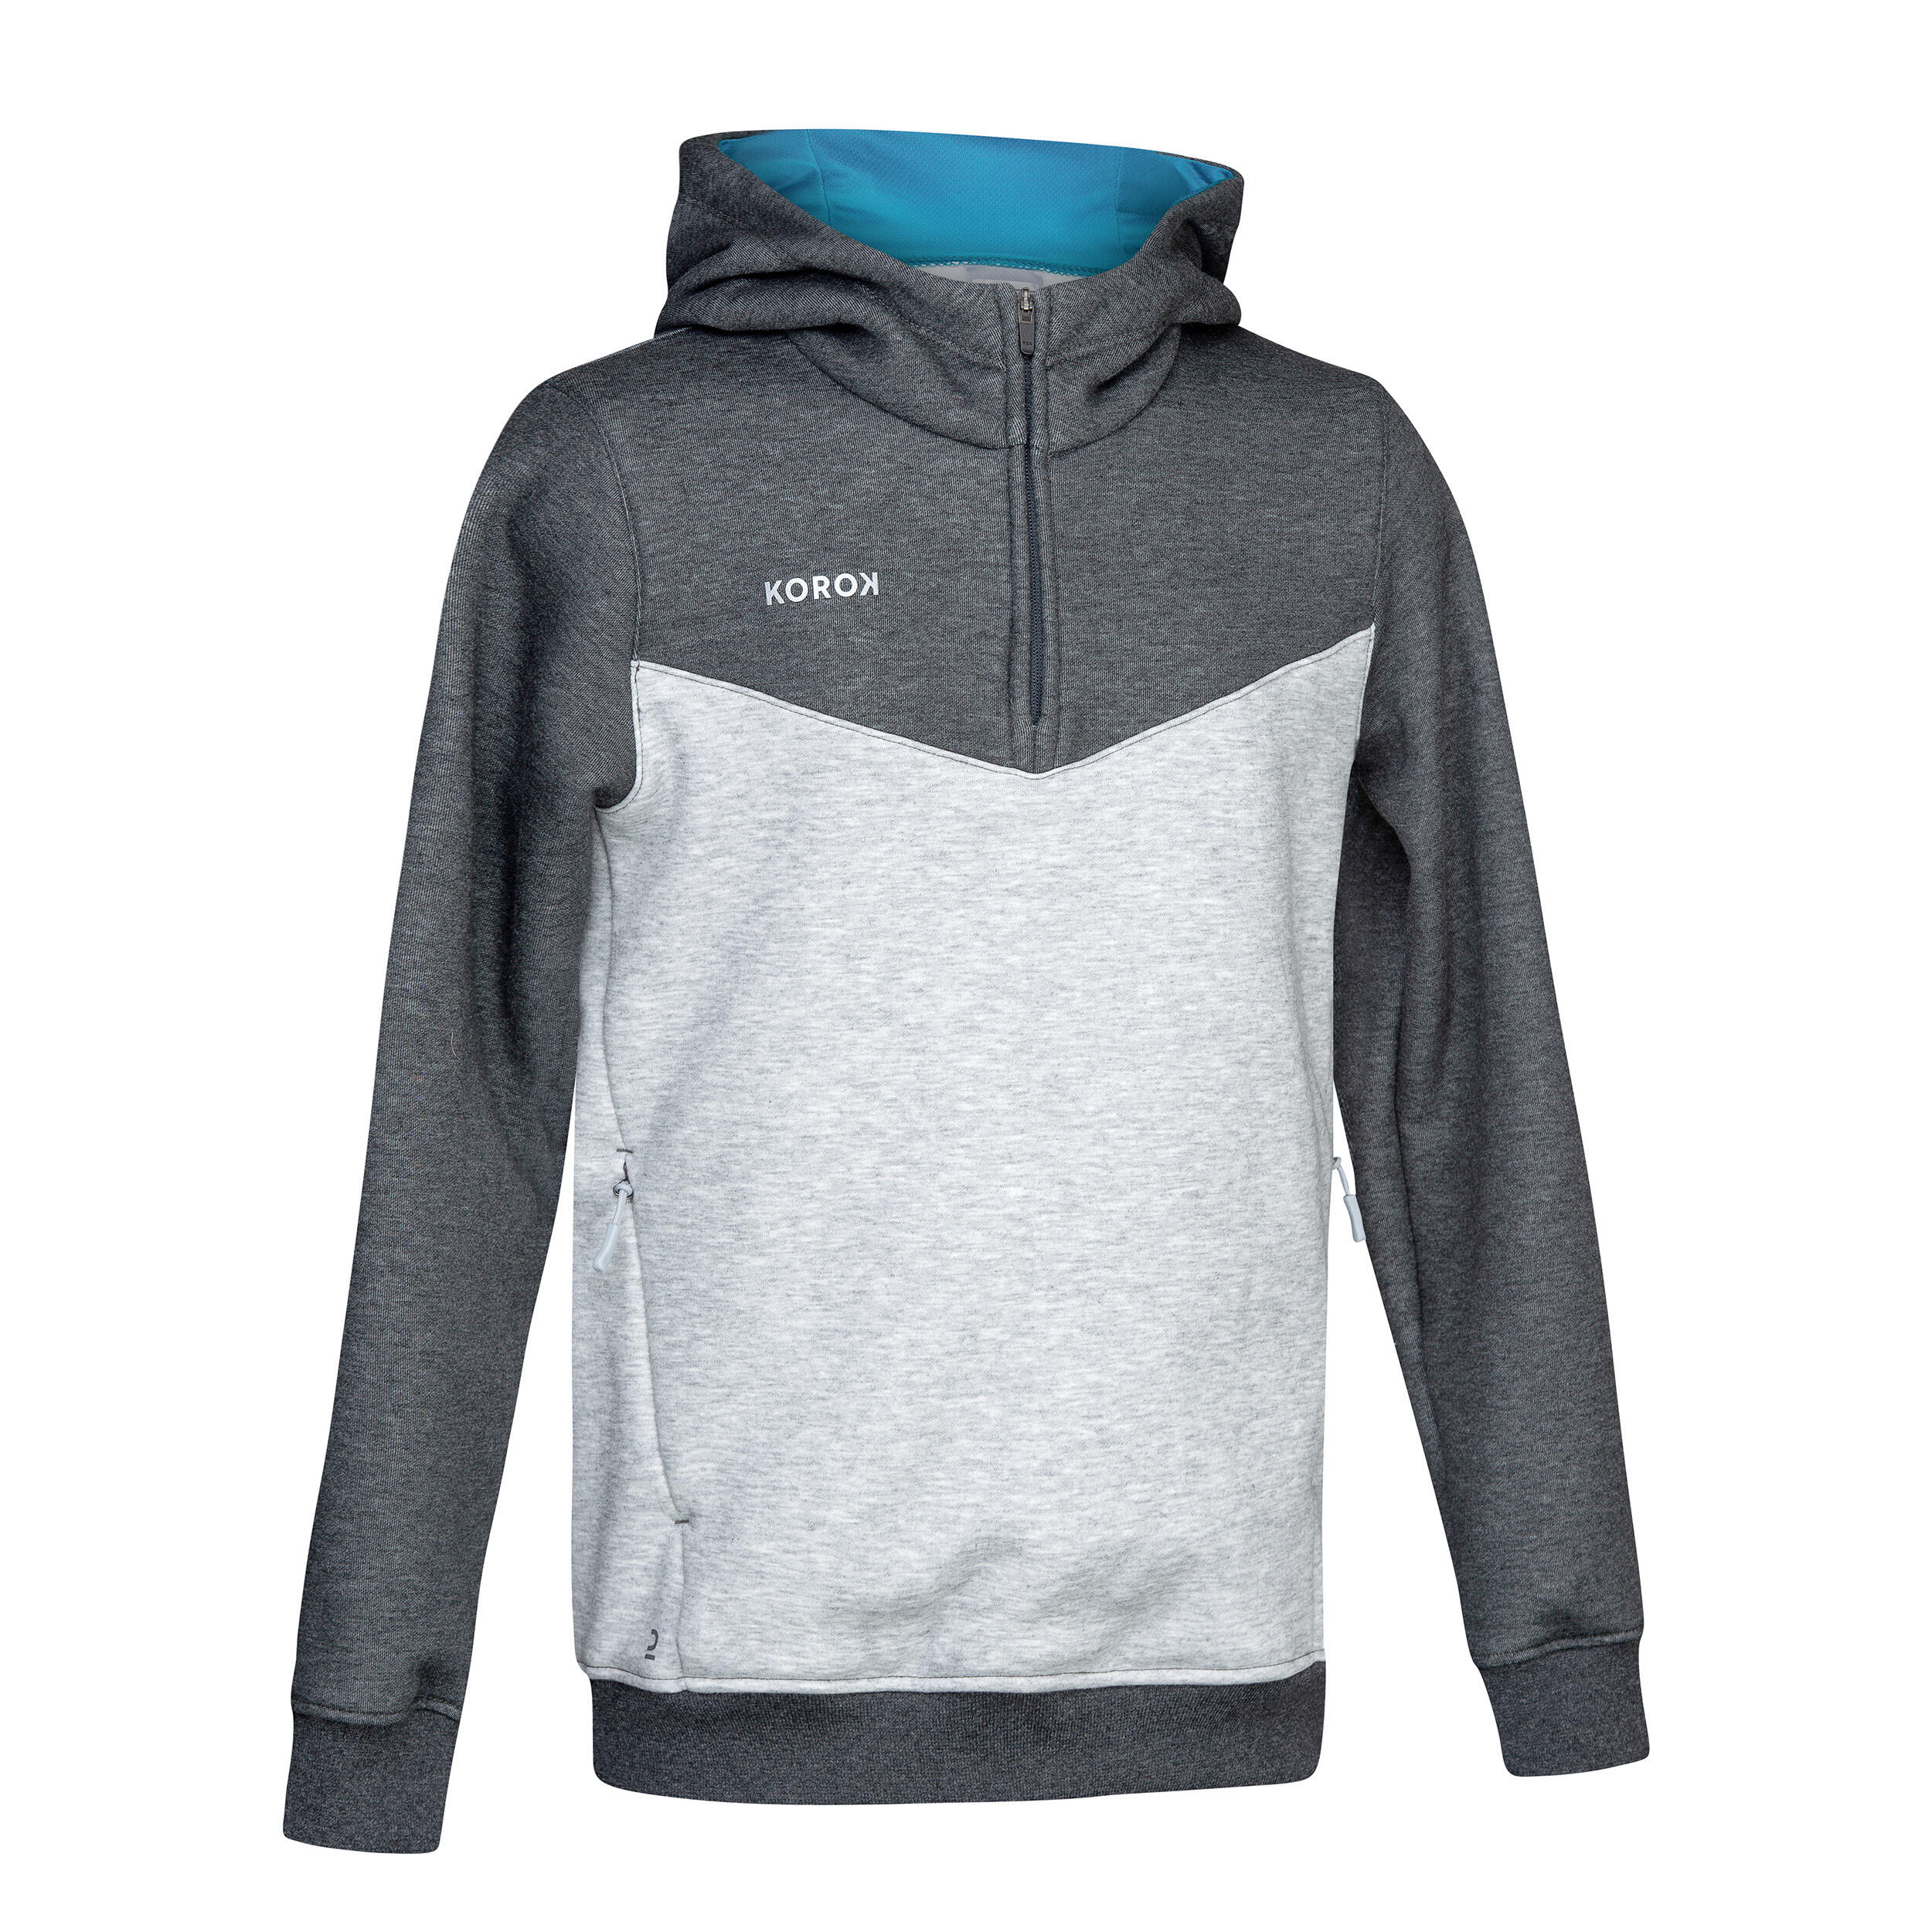 Boys' Field Hockey Sweatshirt FH500 - Grey/Turquoise 1/3